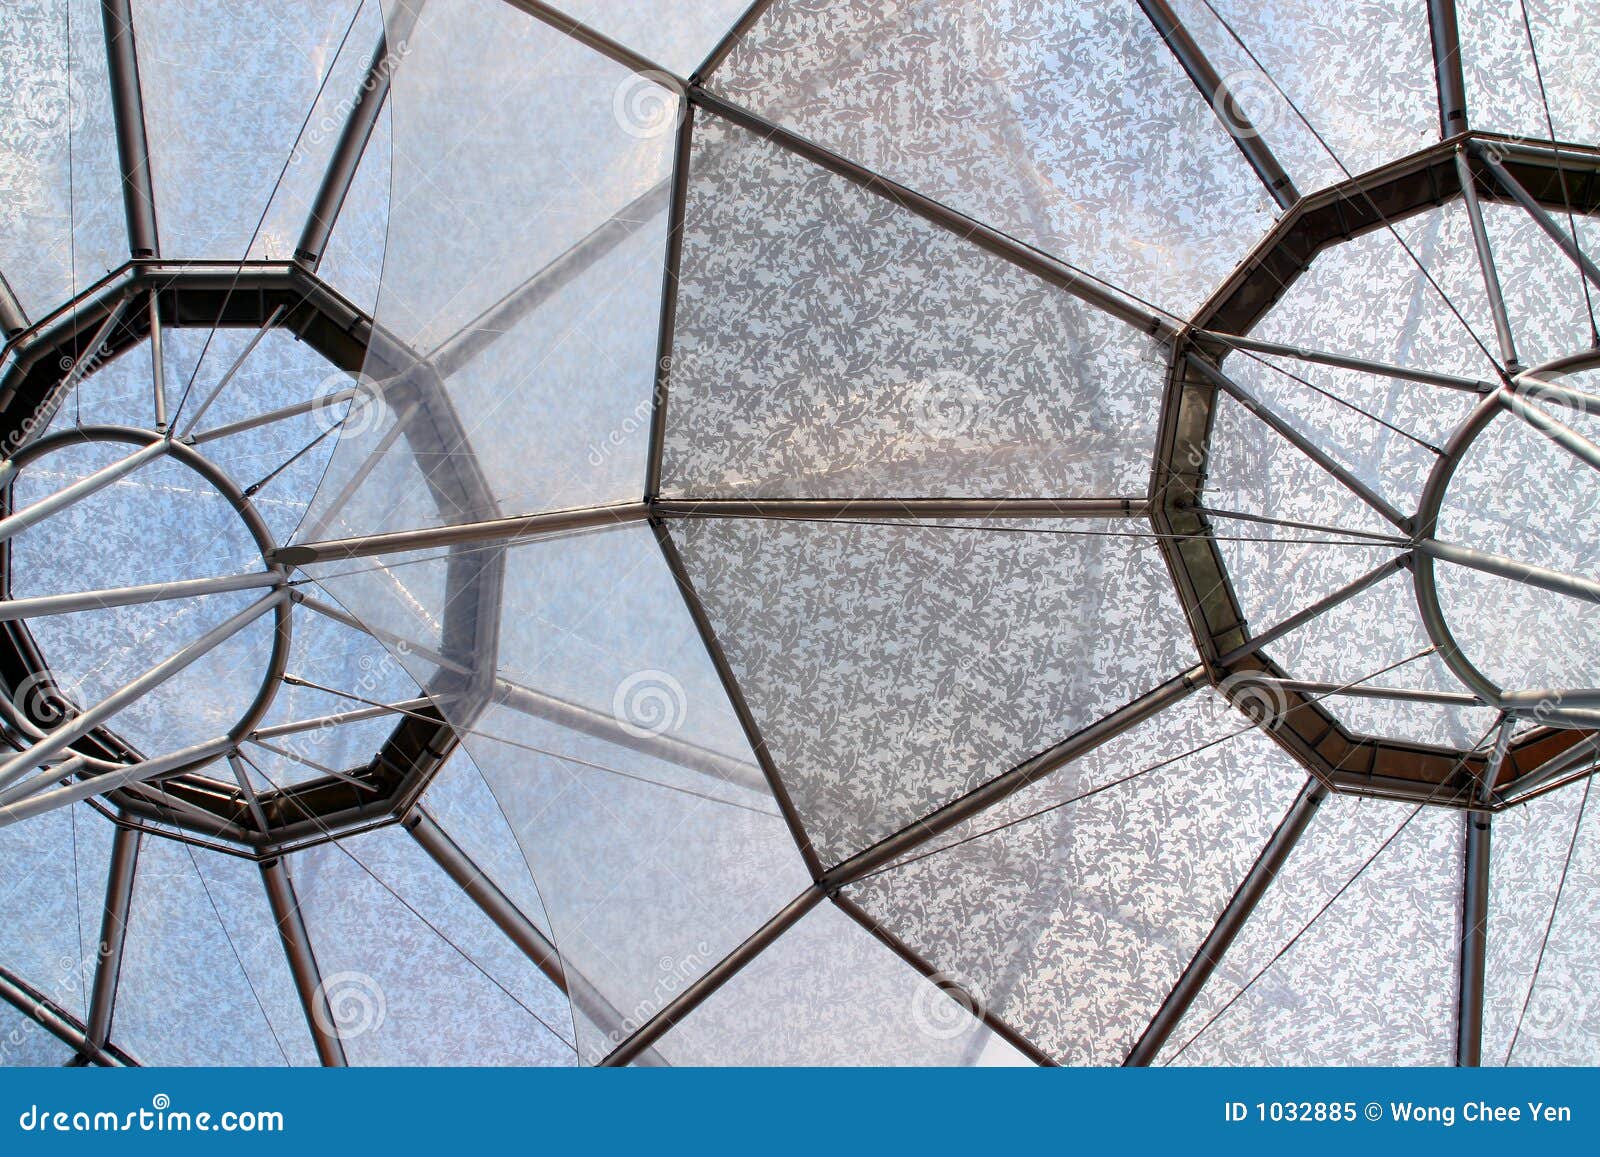 circular umbrella structures